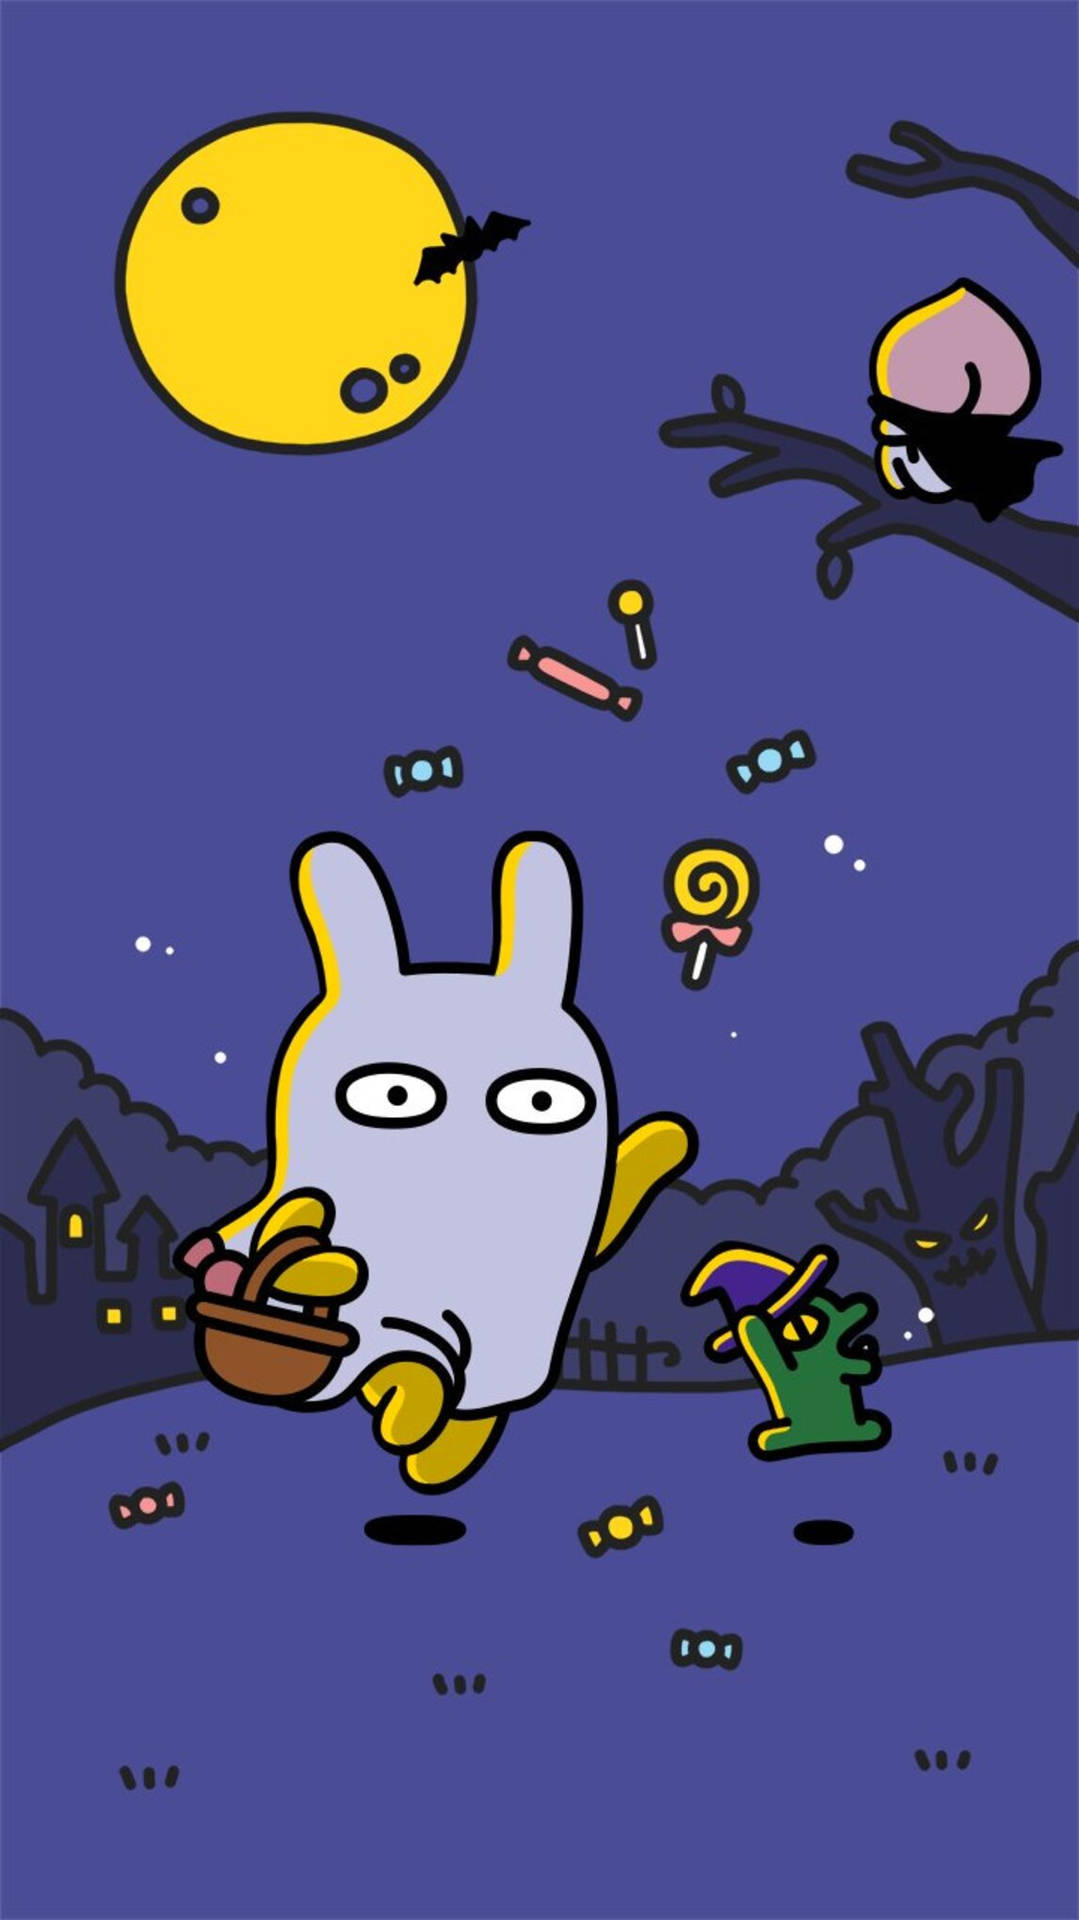 Get ready for a spooky Kakao Friends Halloween! Wallpaper